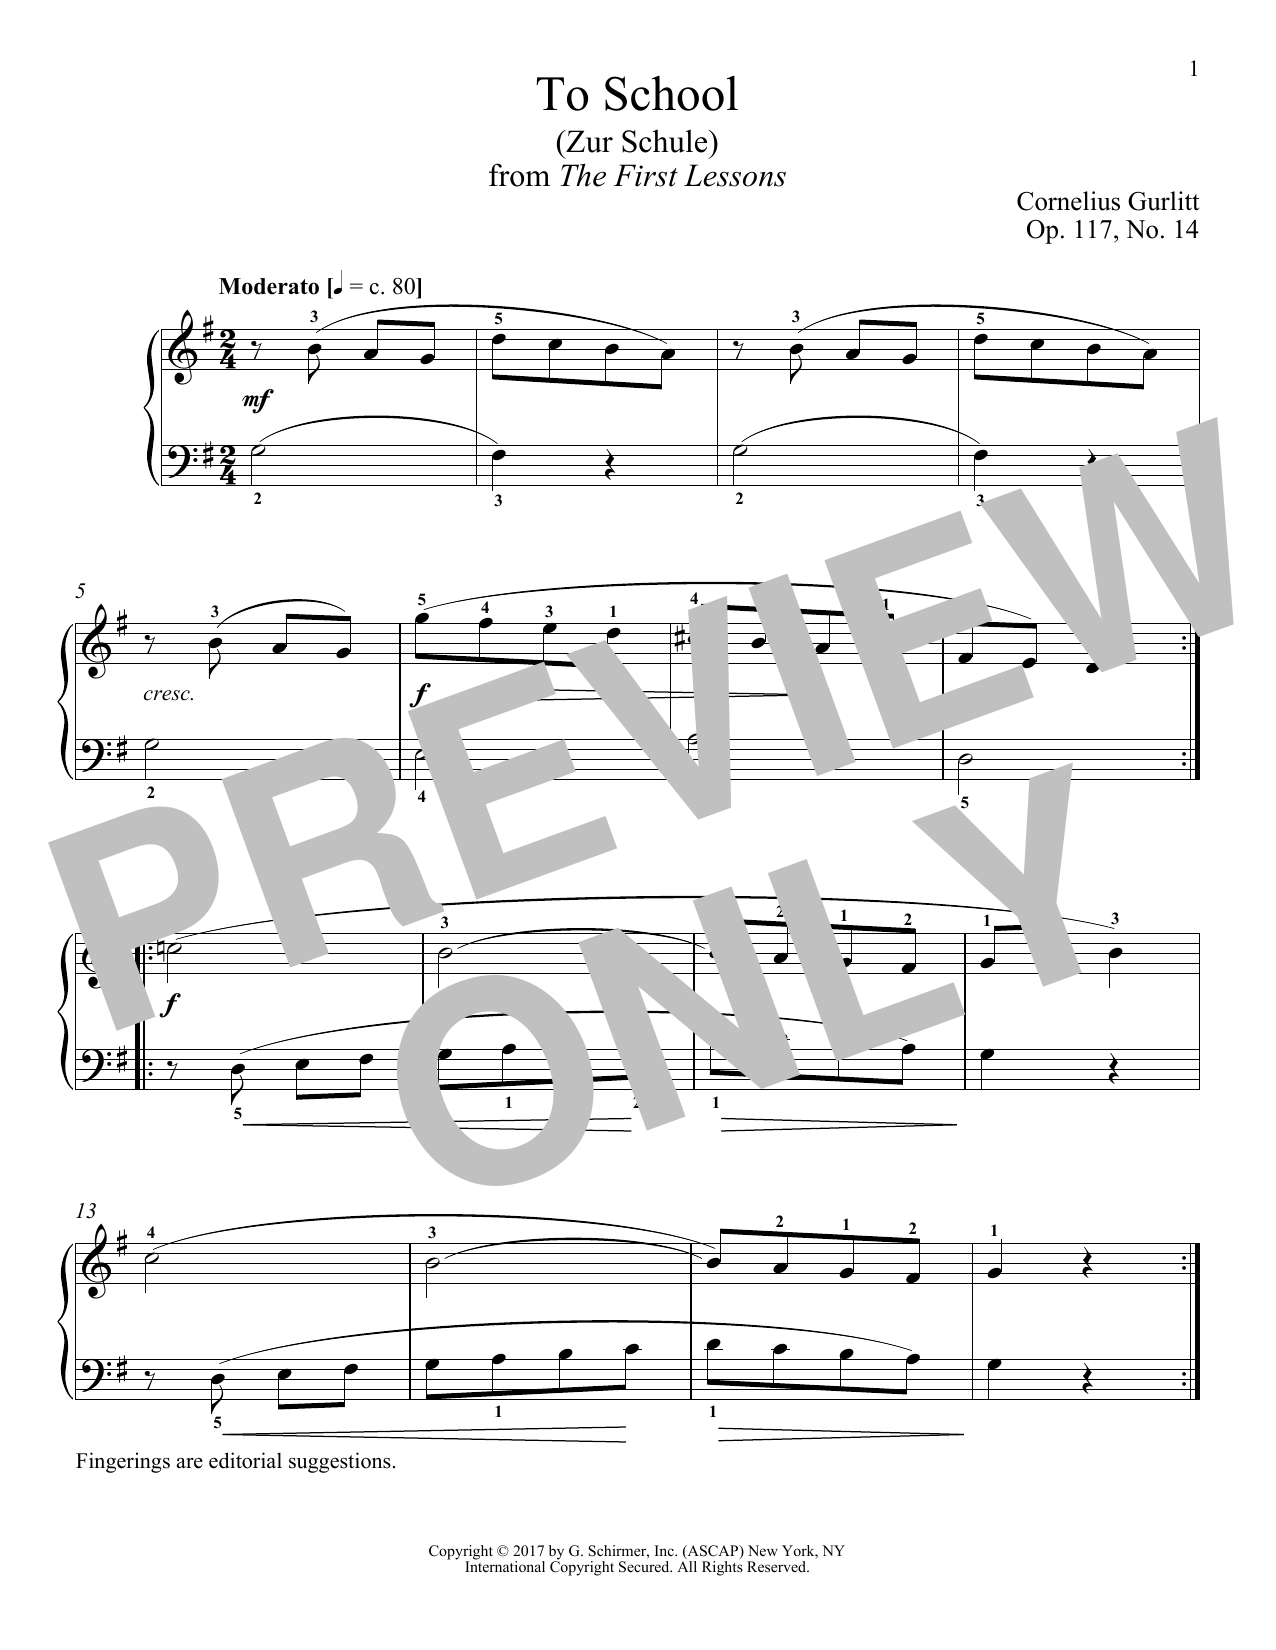 Cornelius Gurlitt To School (Zur Schule), Op. 117, No. 14 Sheet Music Notes & Chords for Piano - Download or Print PDF